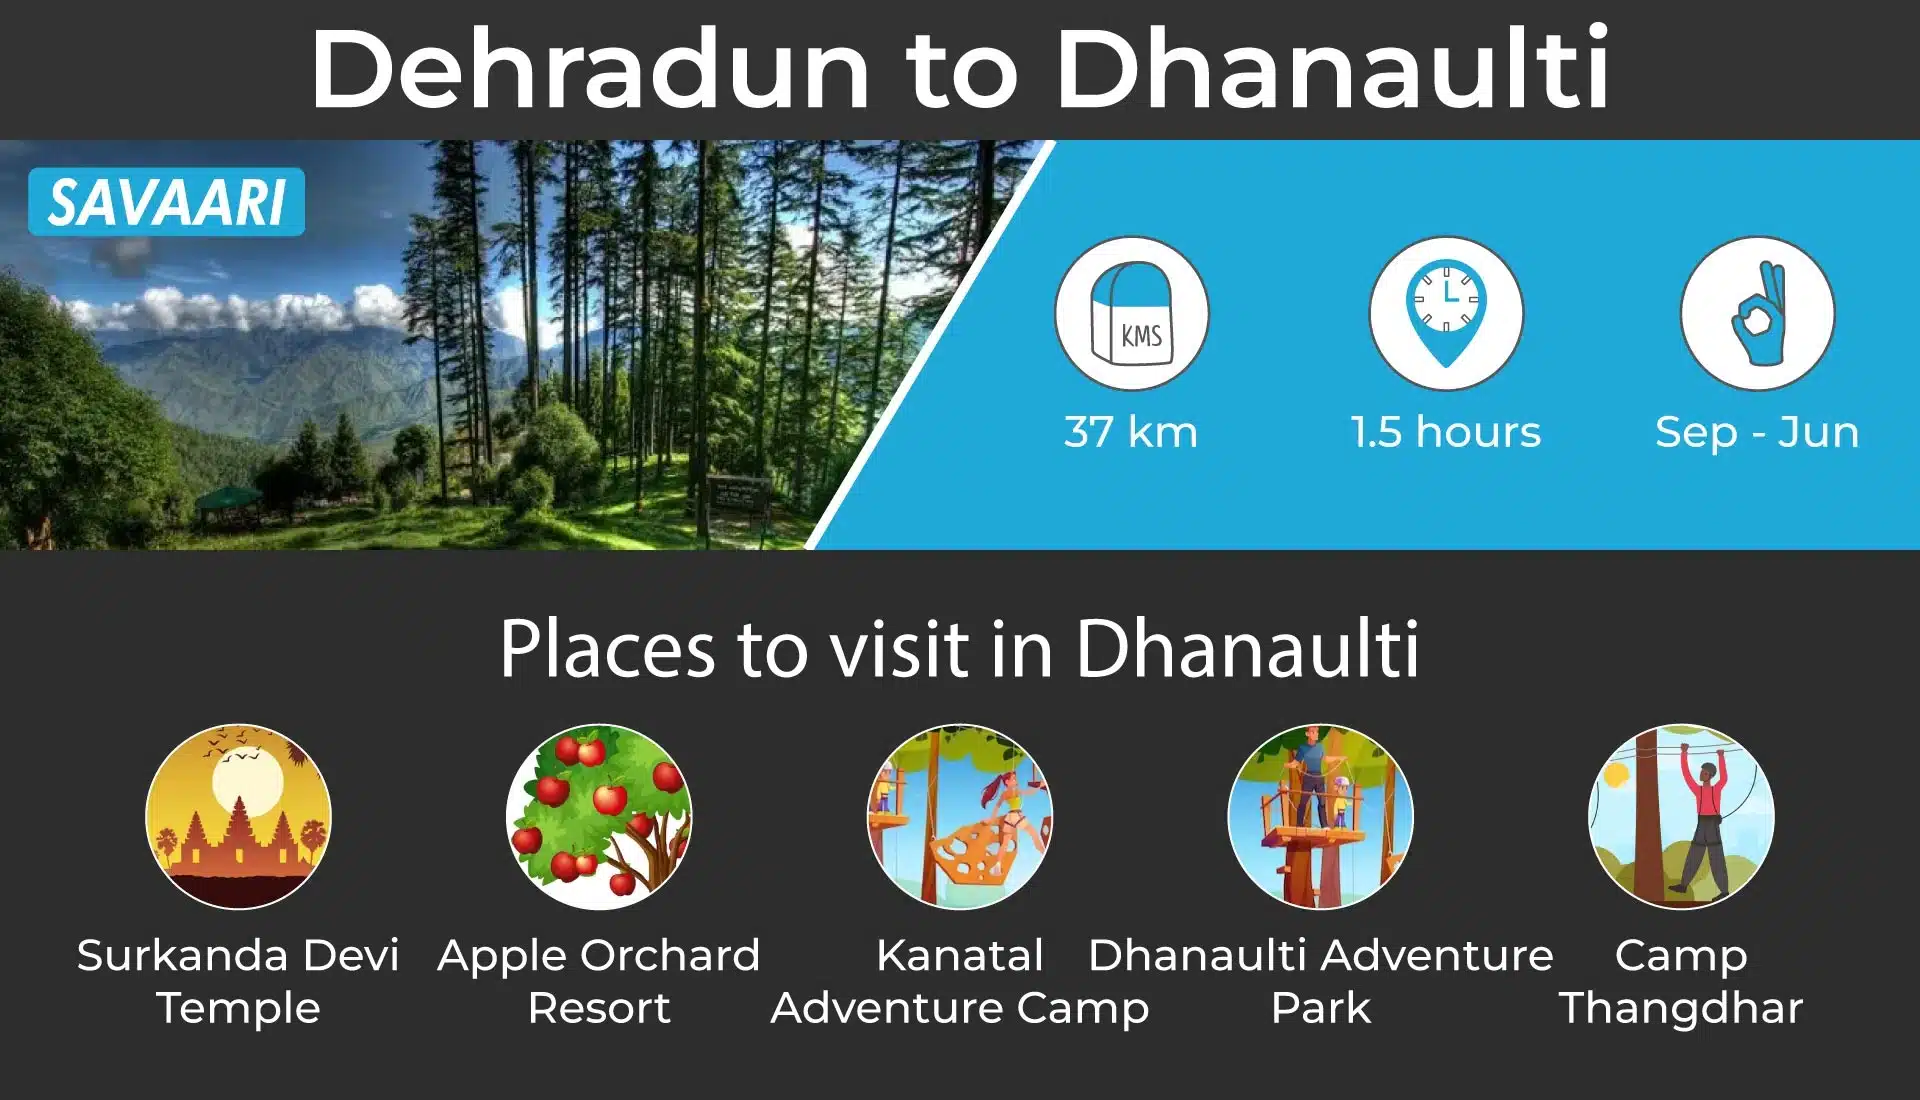 Dehradun to Dhanaulti